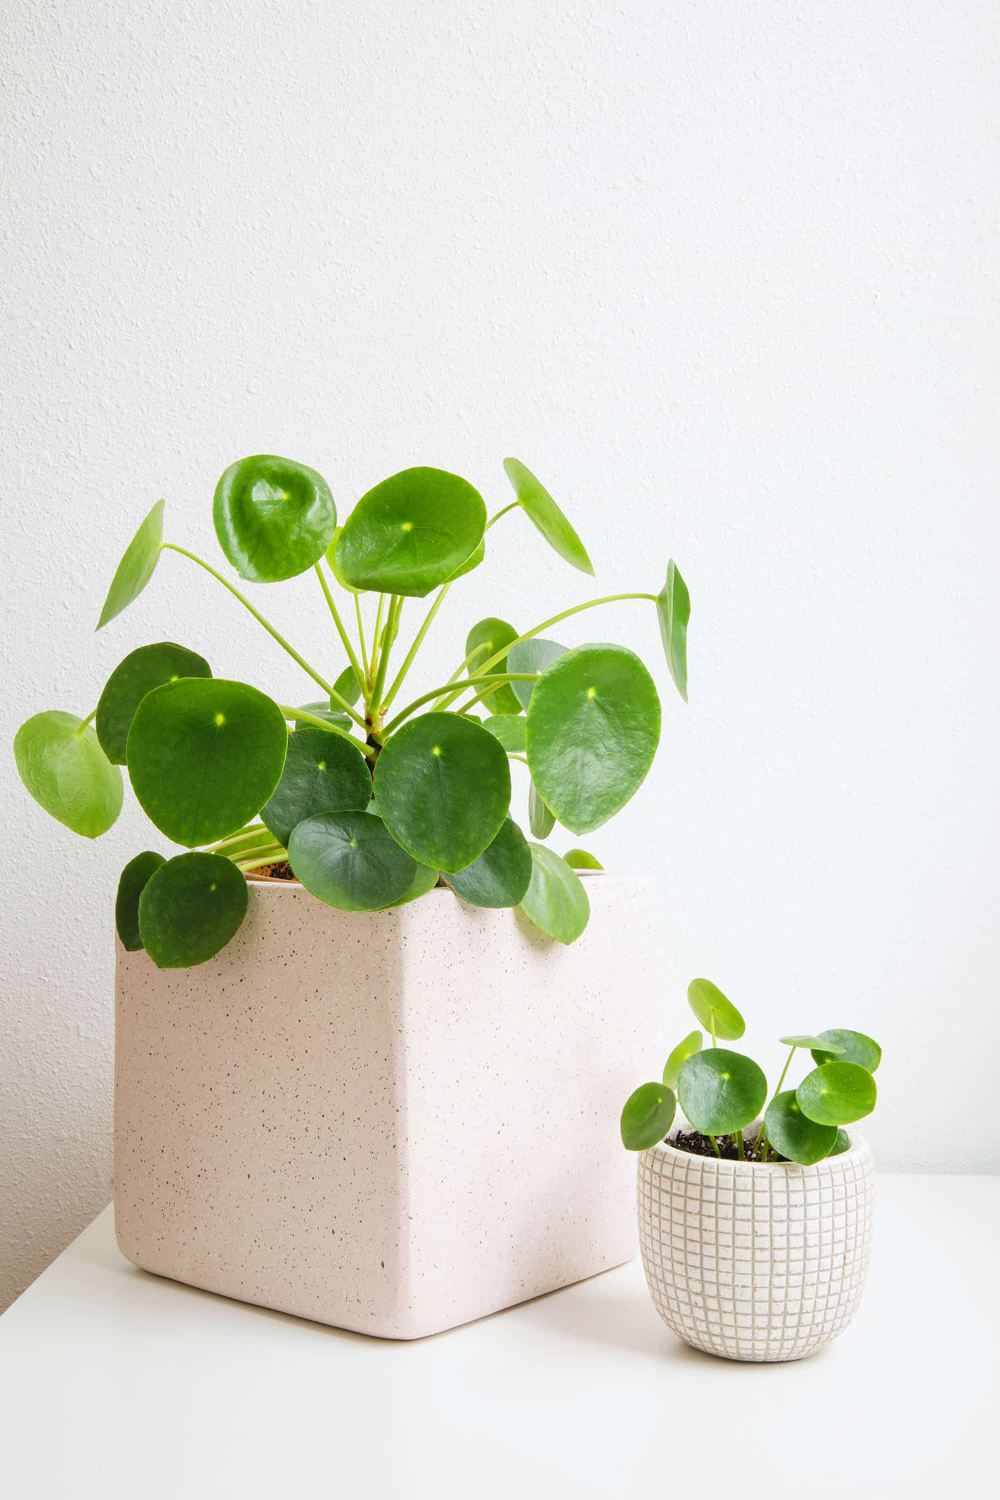 15 plants Beautiful simple ideas